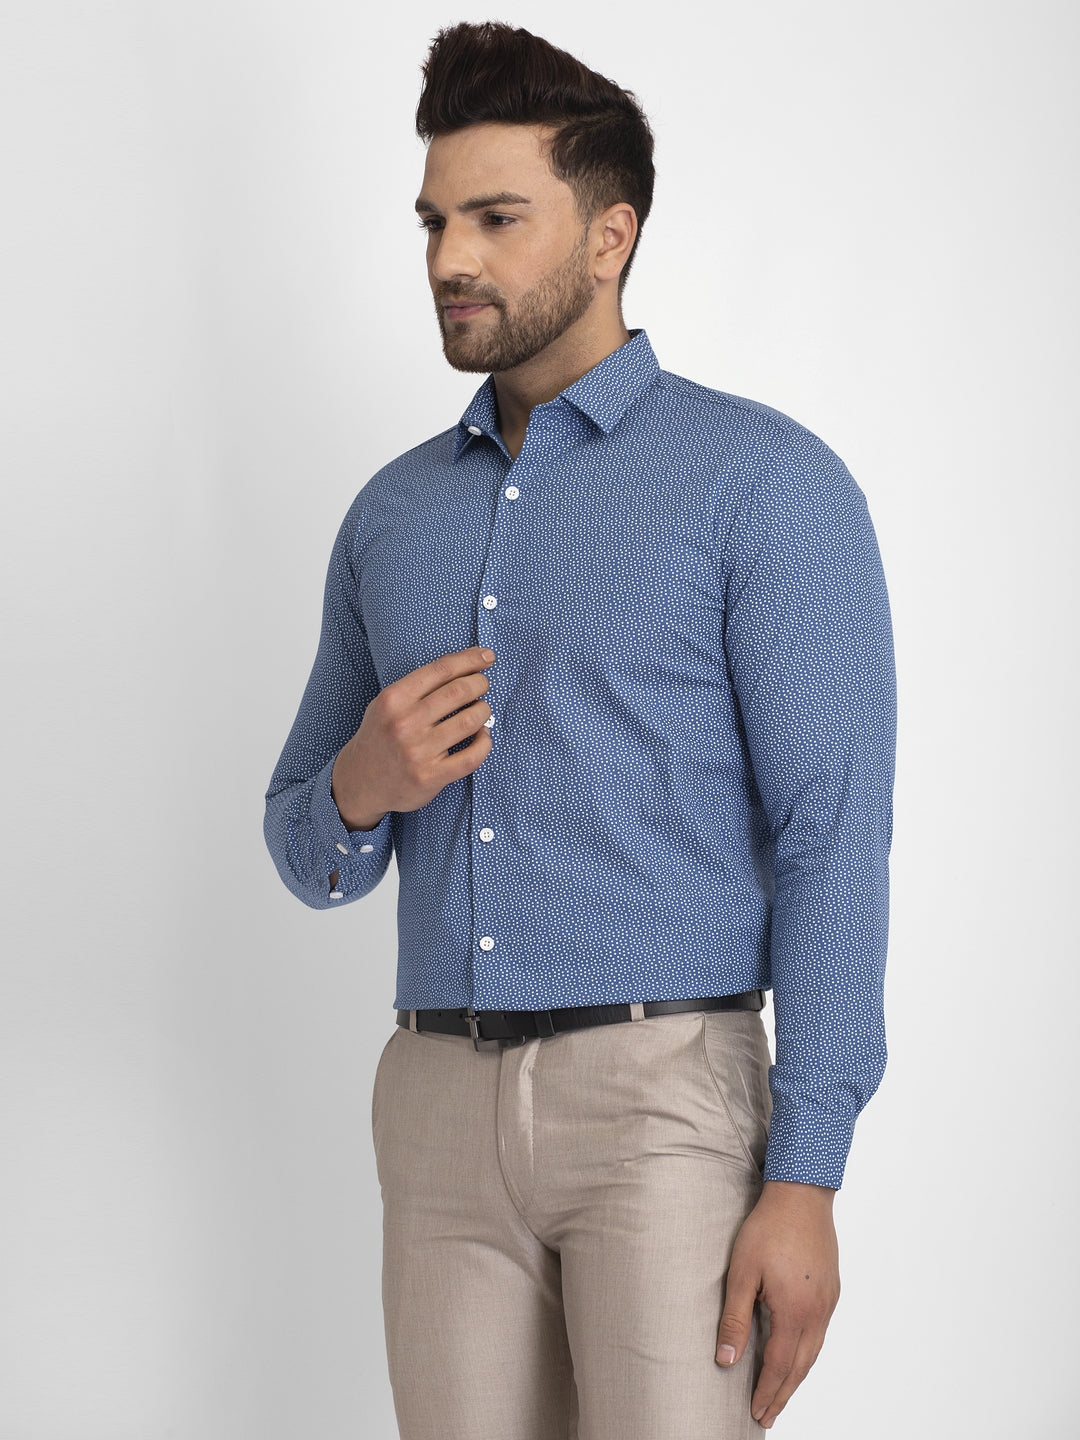 Men's Blue Cotton Printed Formal Shirts ( SF 428Blue ) - Jainish